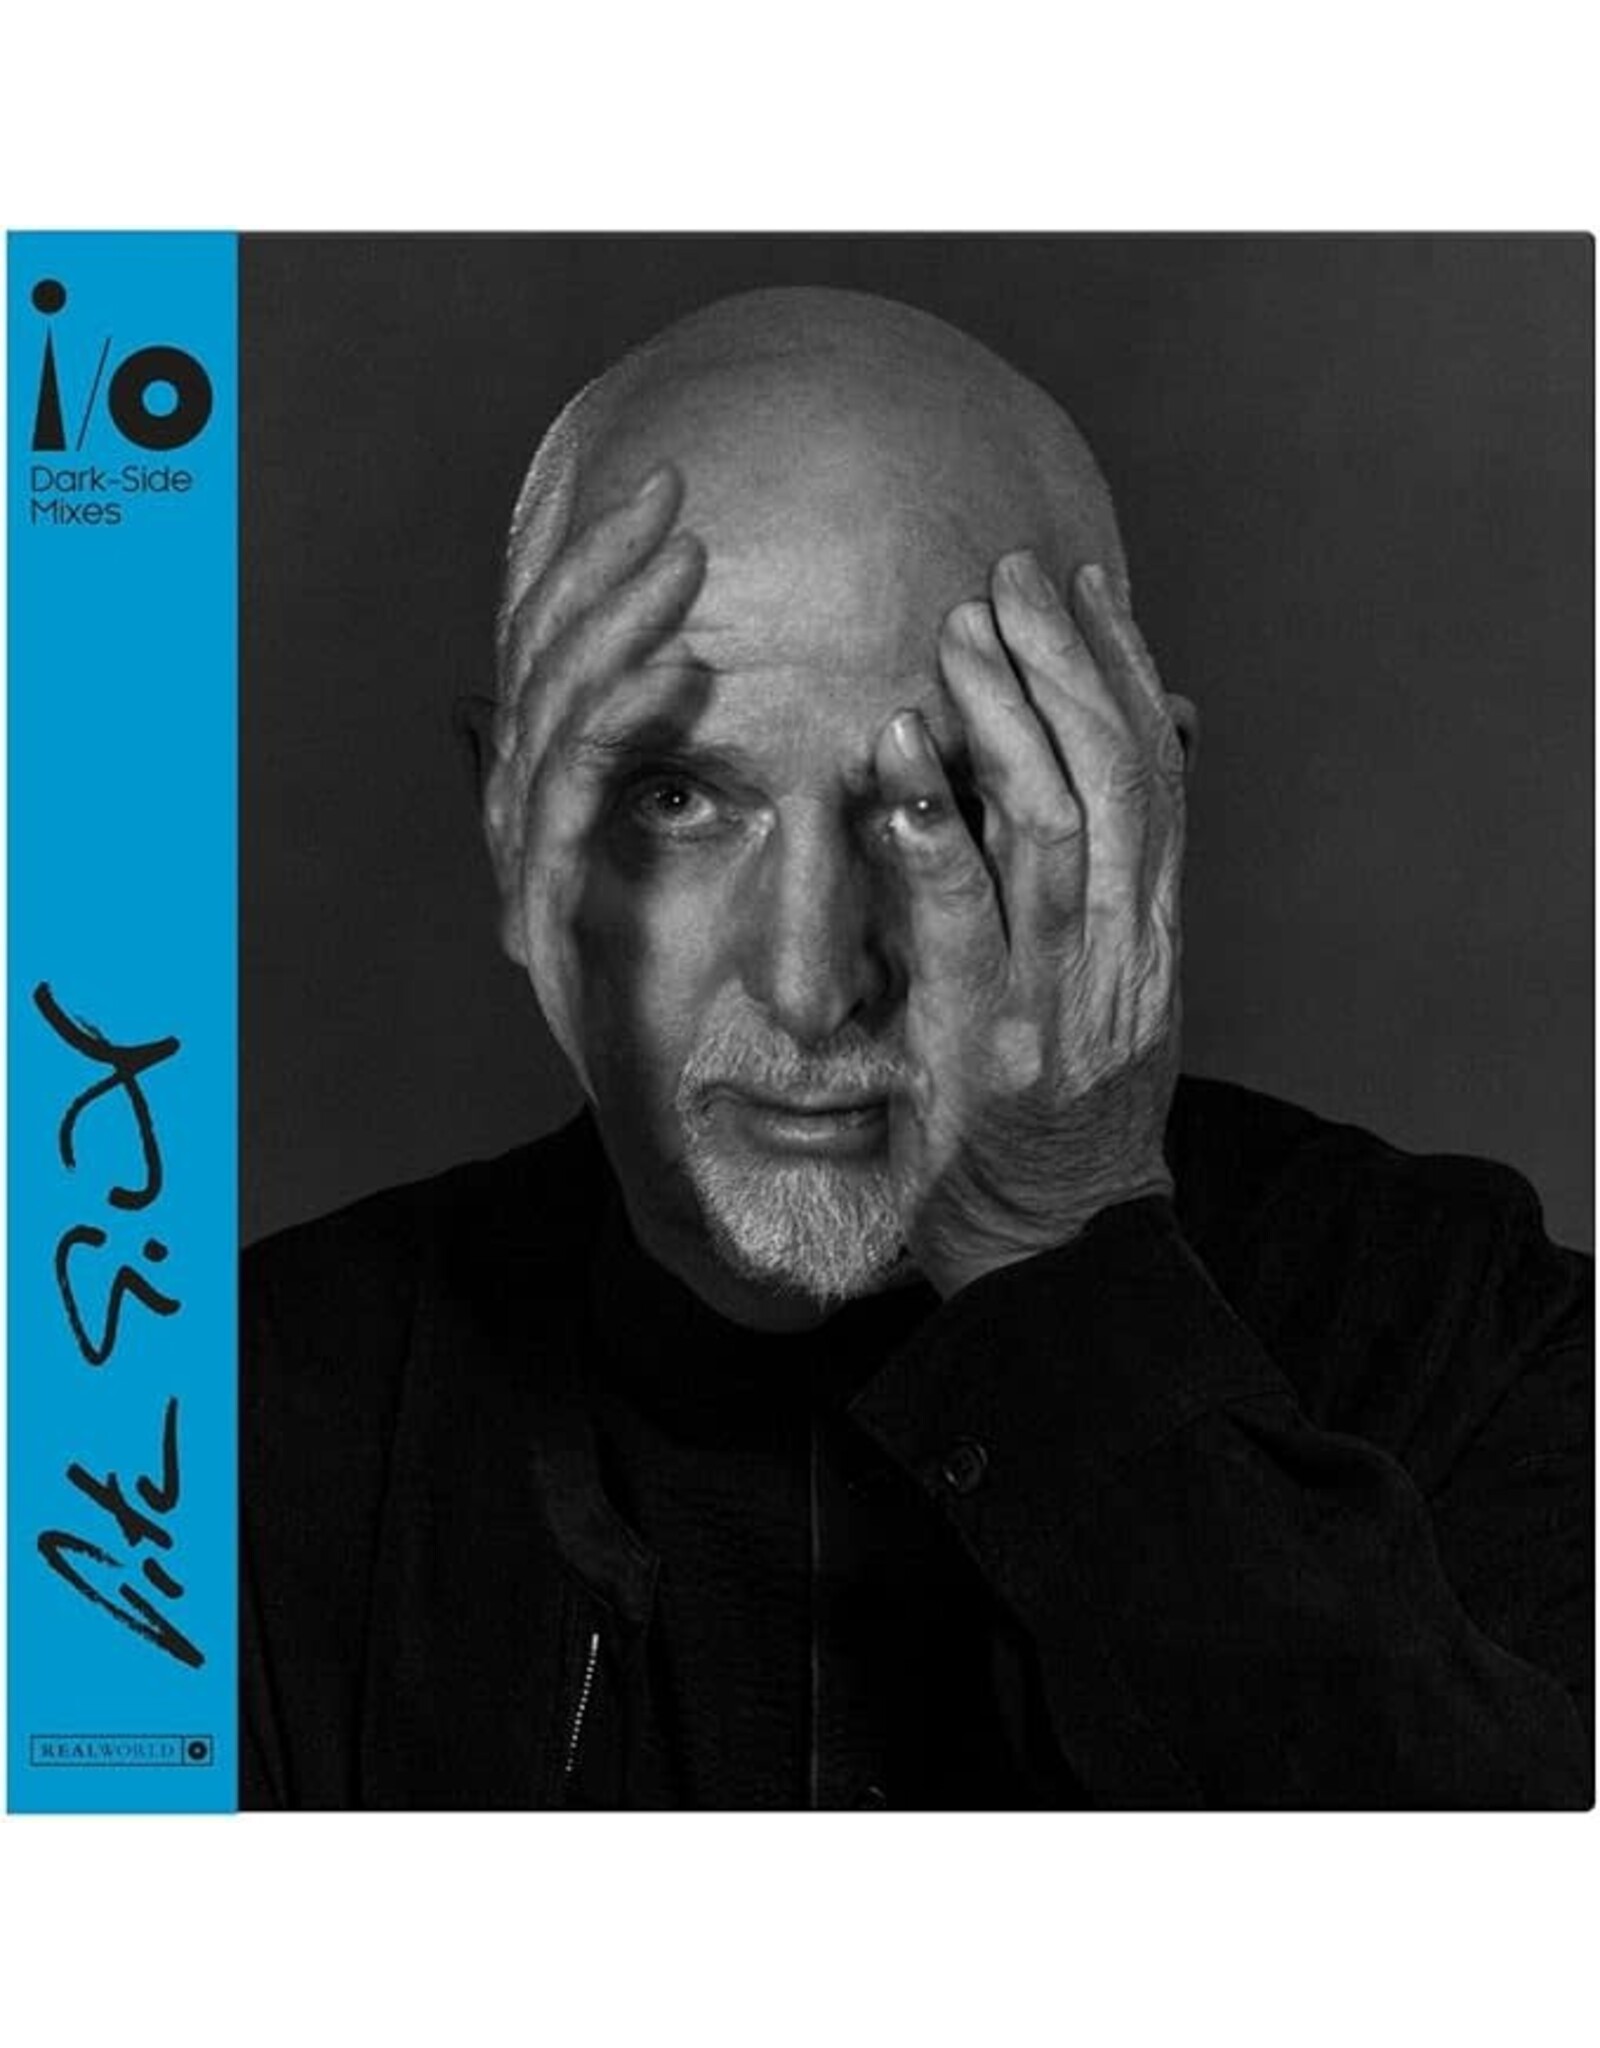 Peter Gabriel - i/o (Dark-Side Mixes)